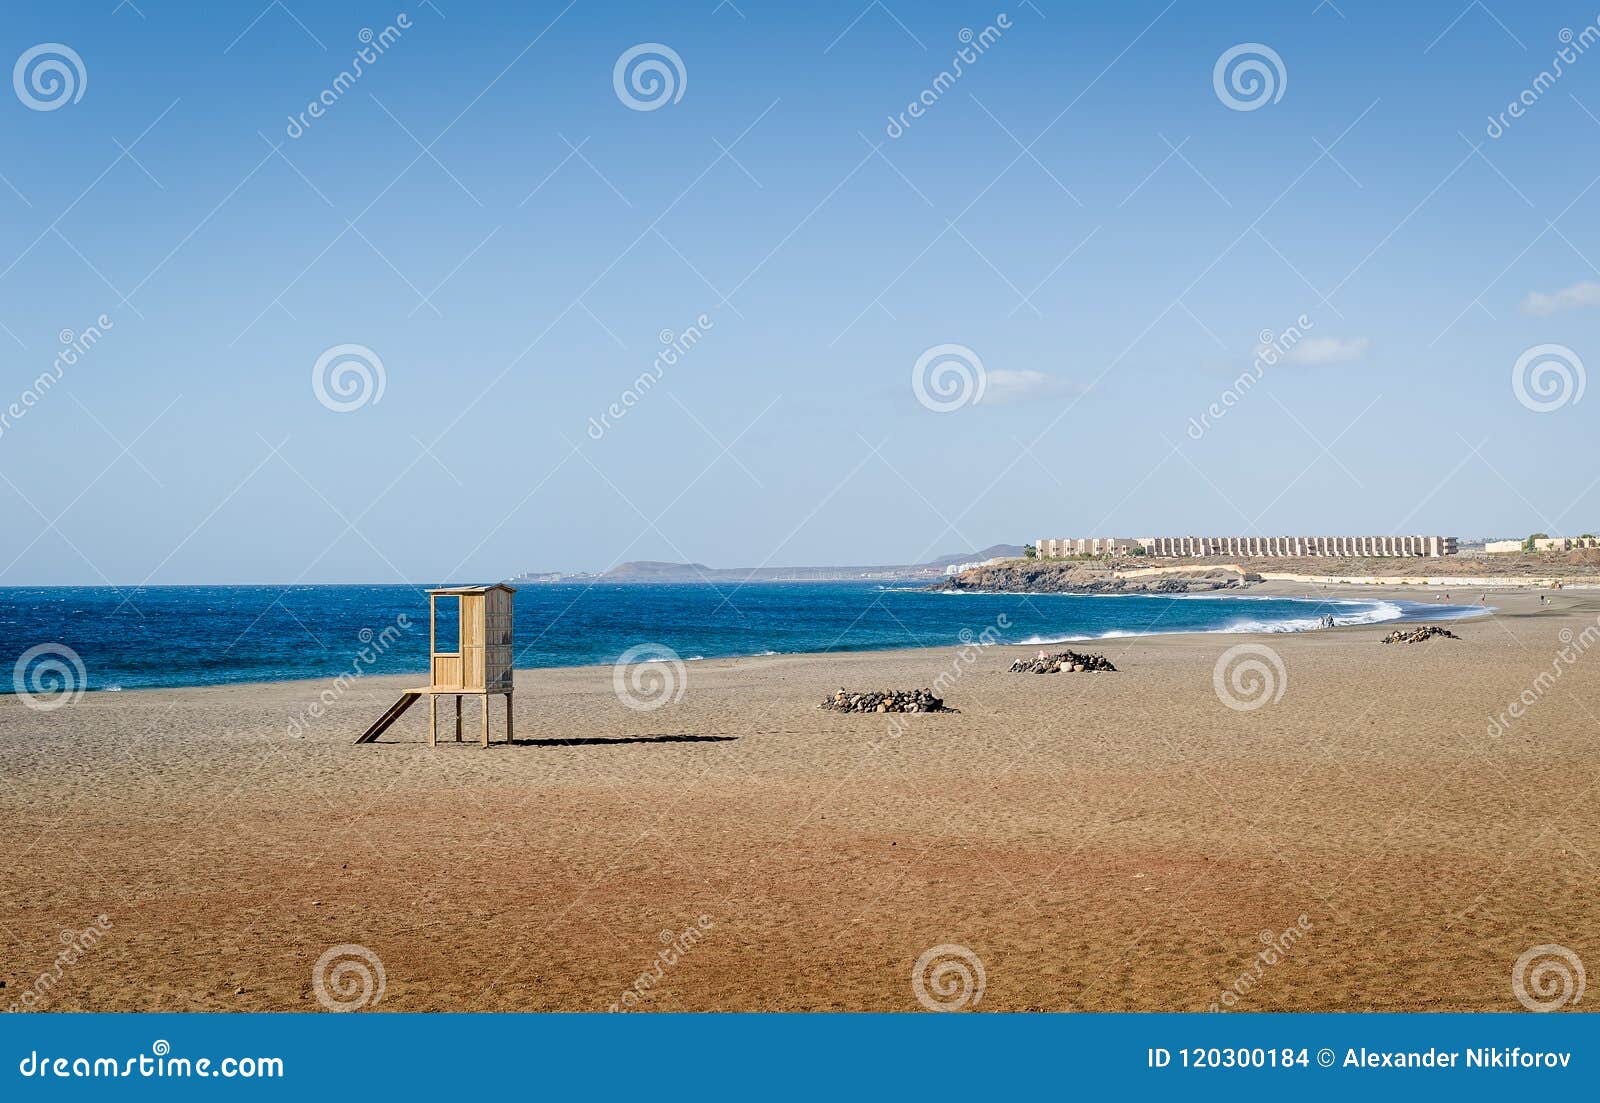 playa de tejita sand beach at tenerife island